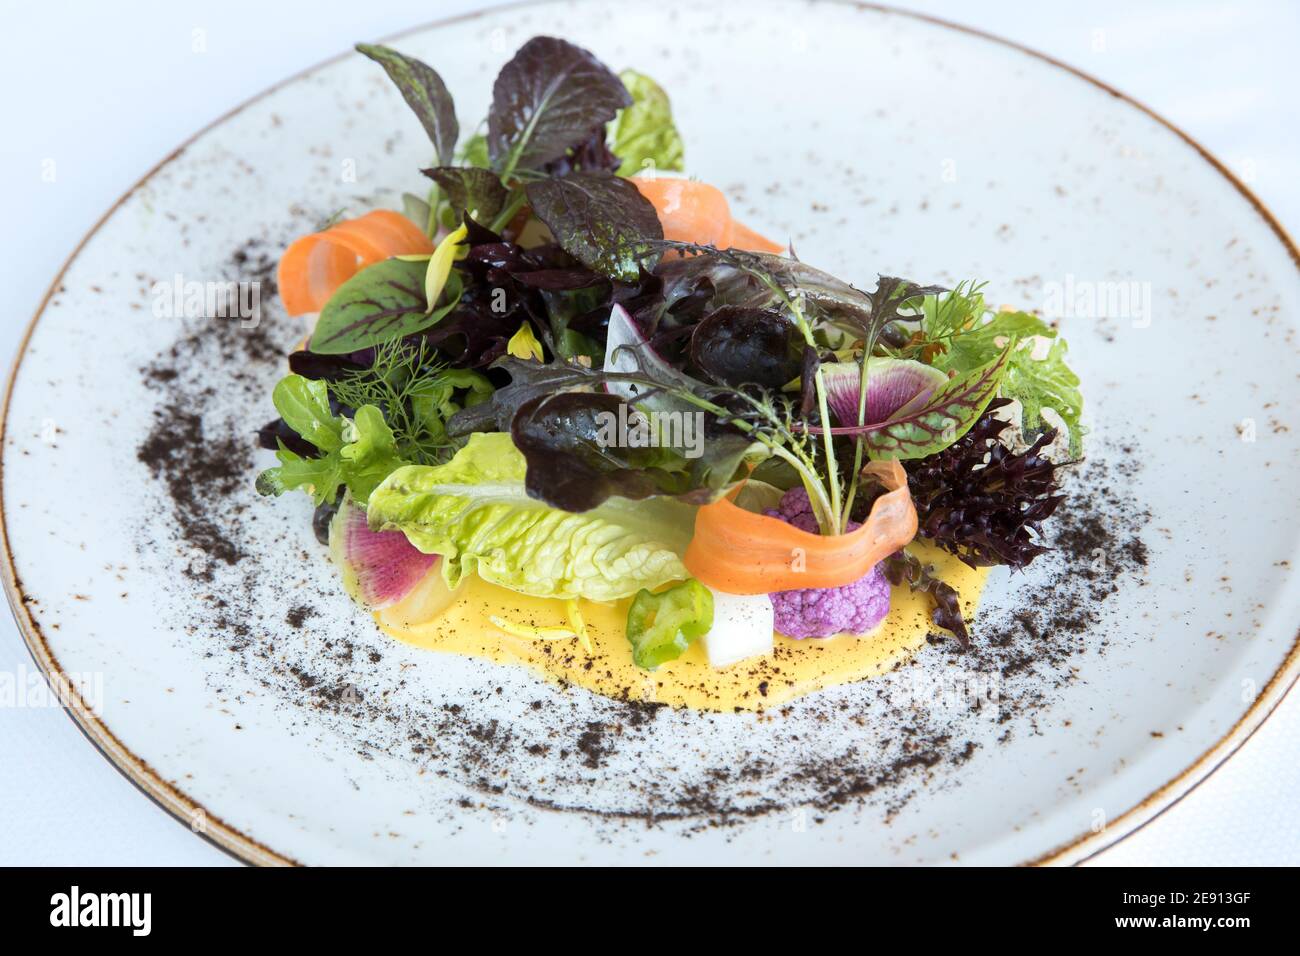 https://c8.alamy.com/comp/2E913GF/colorful-gourmet-salad-with-mixed-greens-carrot-purple-cauliflower-2E913GF.jpg